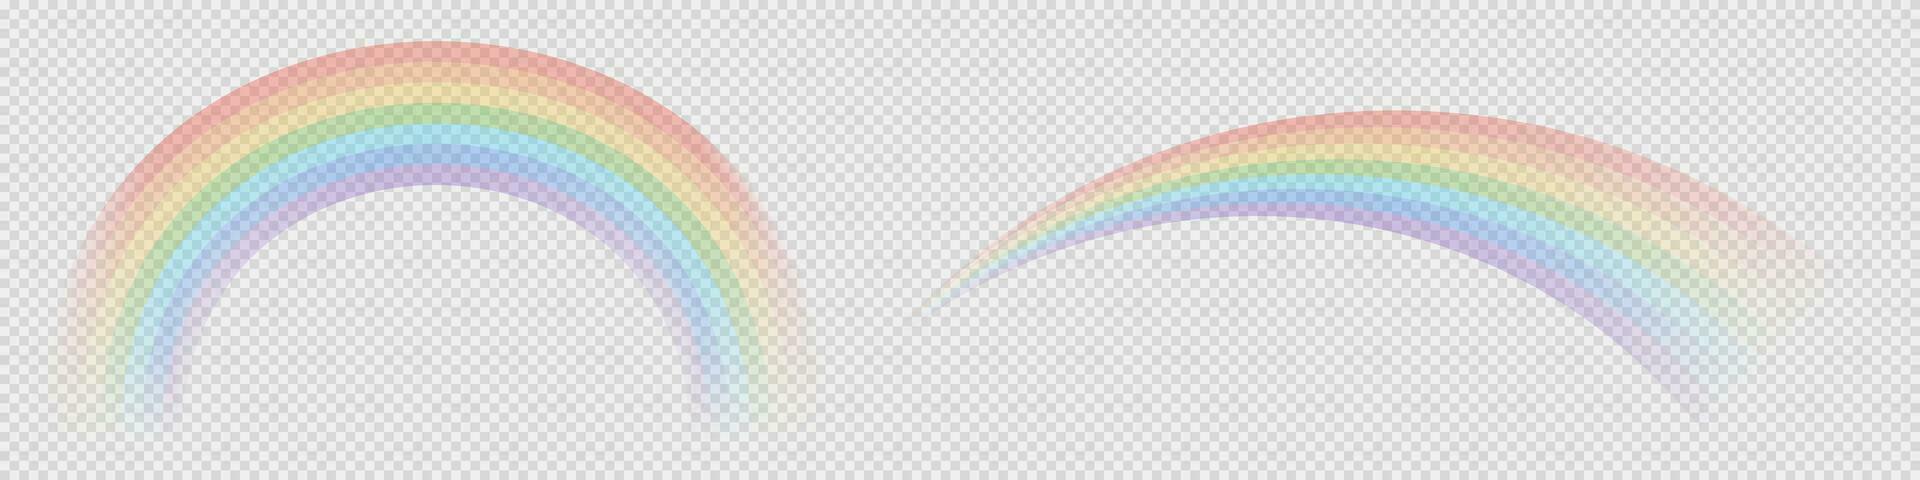 Regenbogen Symbol. isoliert realistisch nach Regen Himmel Hintergrund. Regenbogen Bogen. bunt Bogen Illustration. vektor